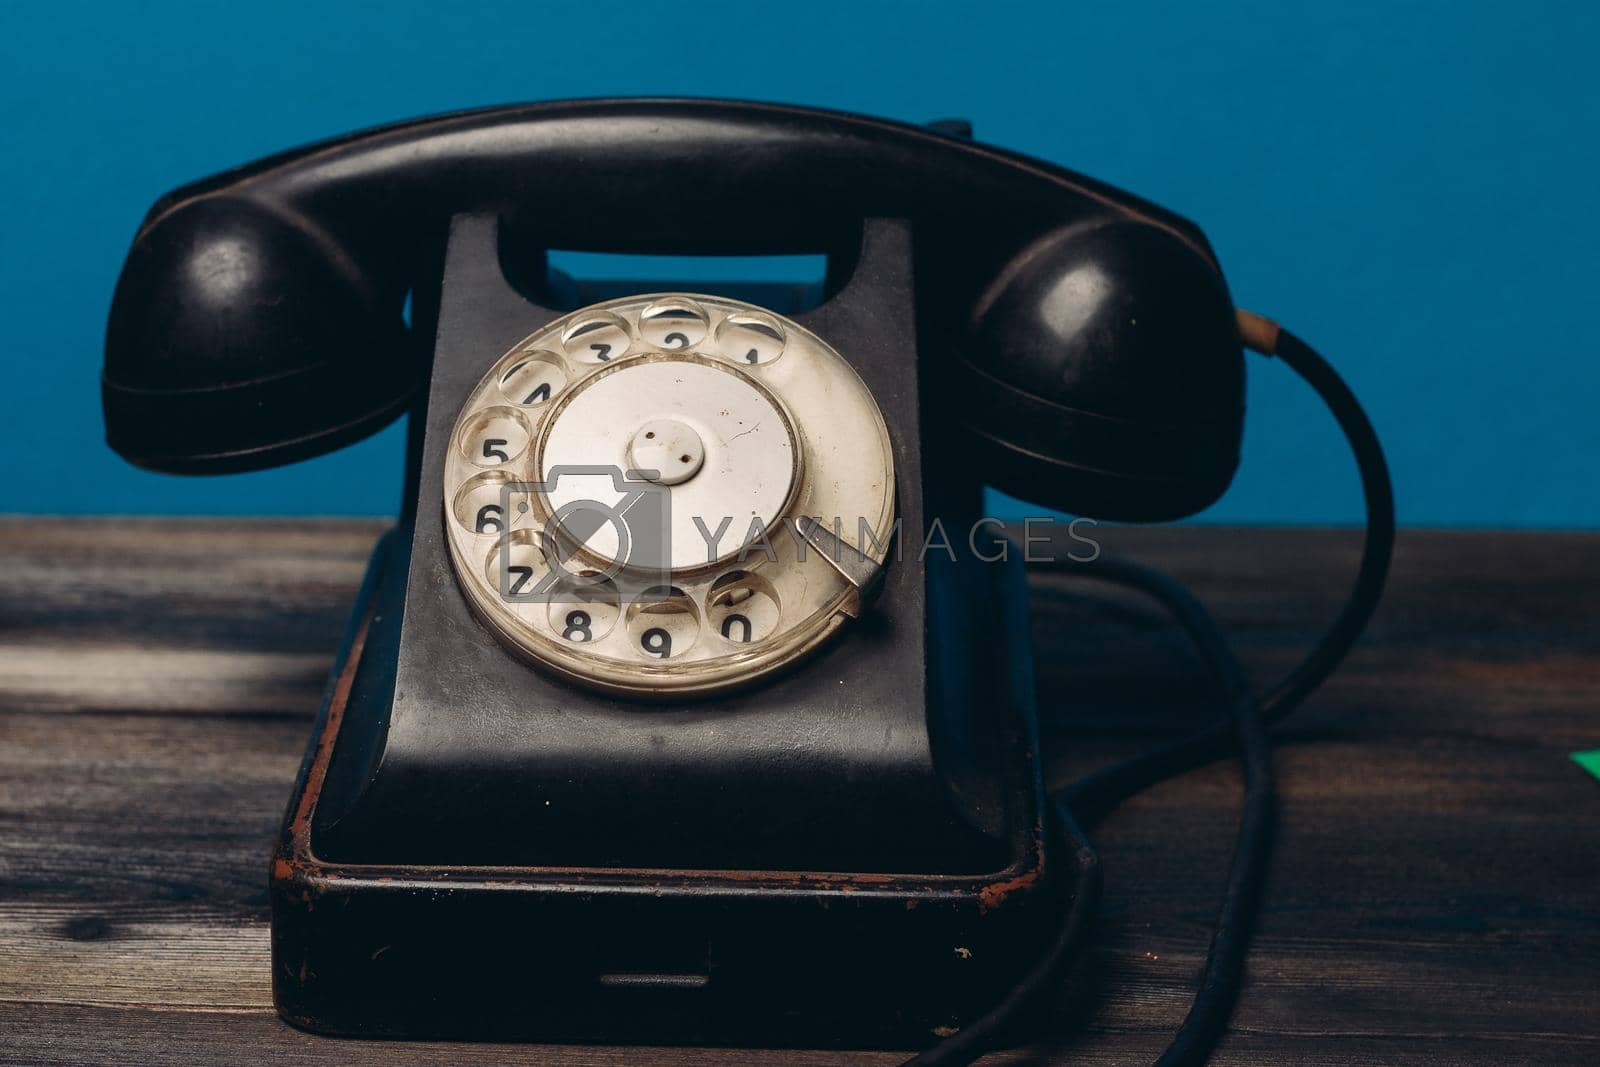 retro telephone nostalgia communication antique close-up technology. High quality photo